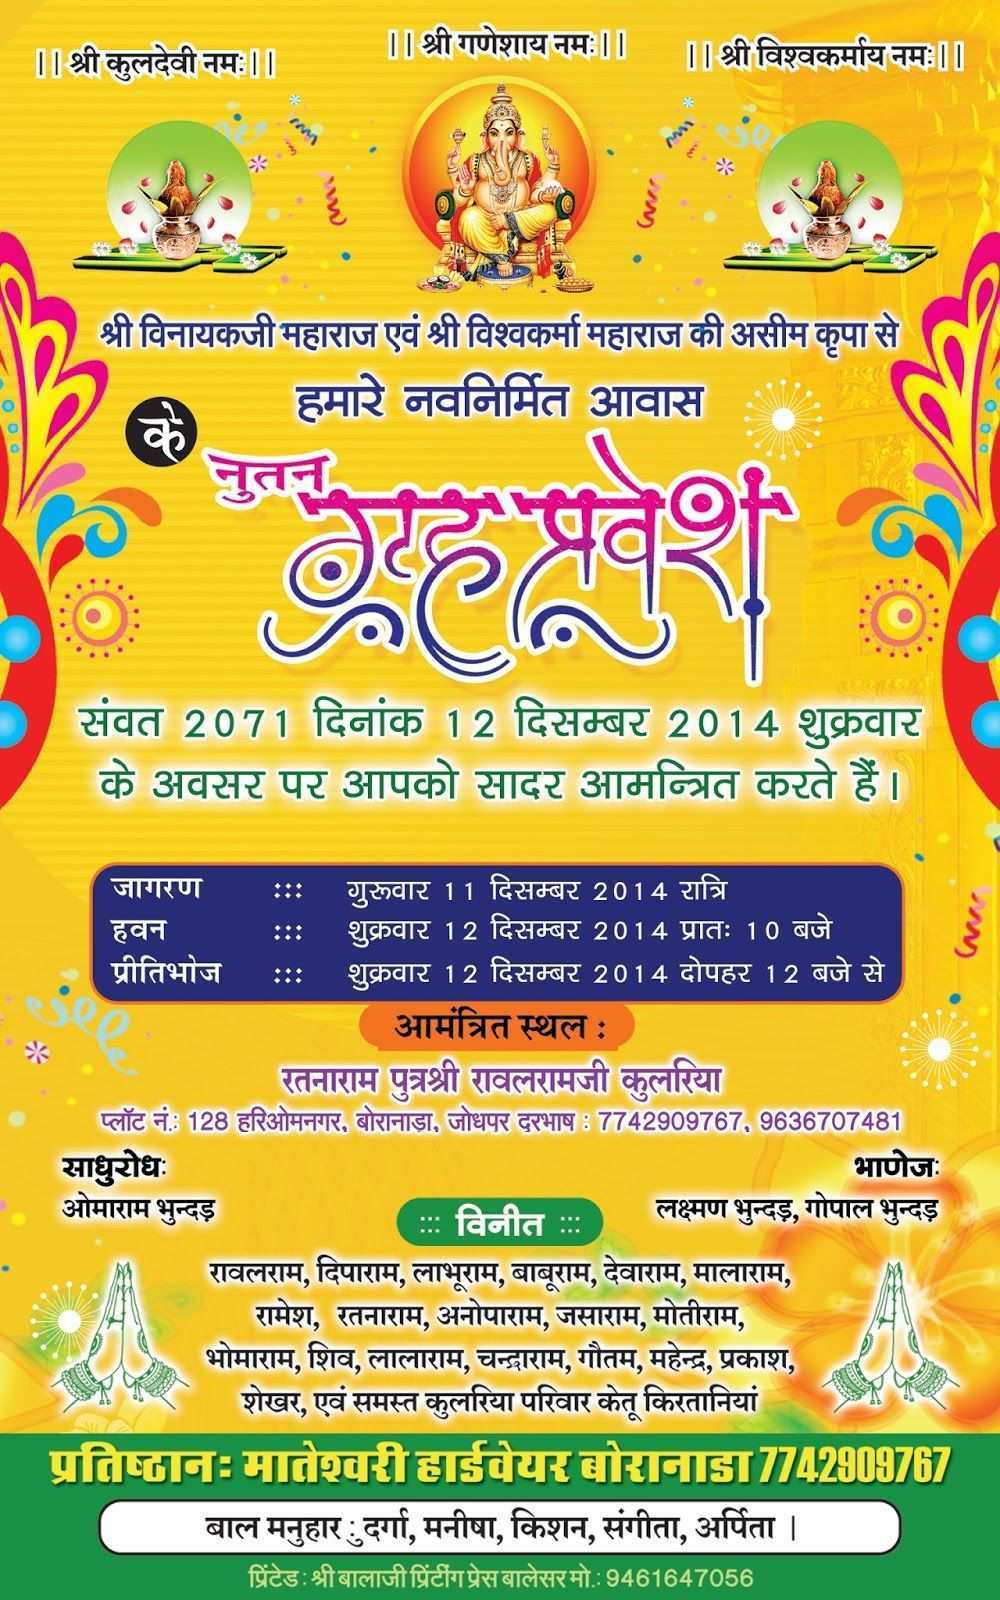 37 Free Invitation Cards Templates For Vastu Shanti for Ms Word for Invitation Cards Templates For Vastu Shanti